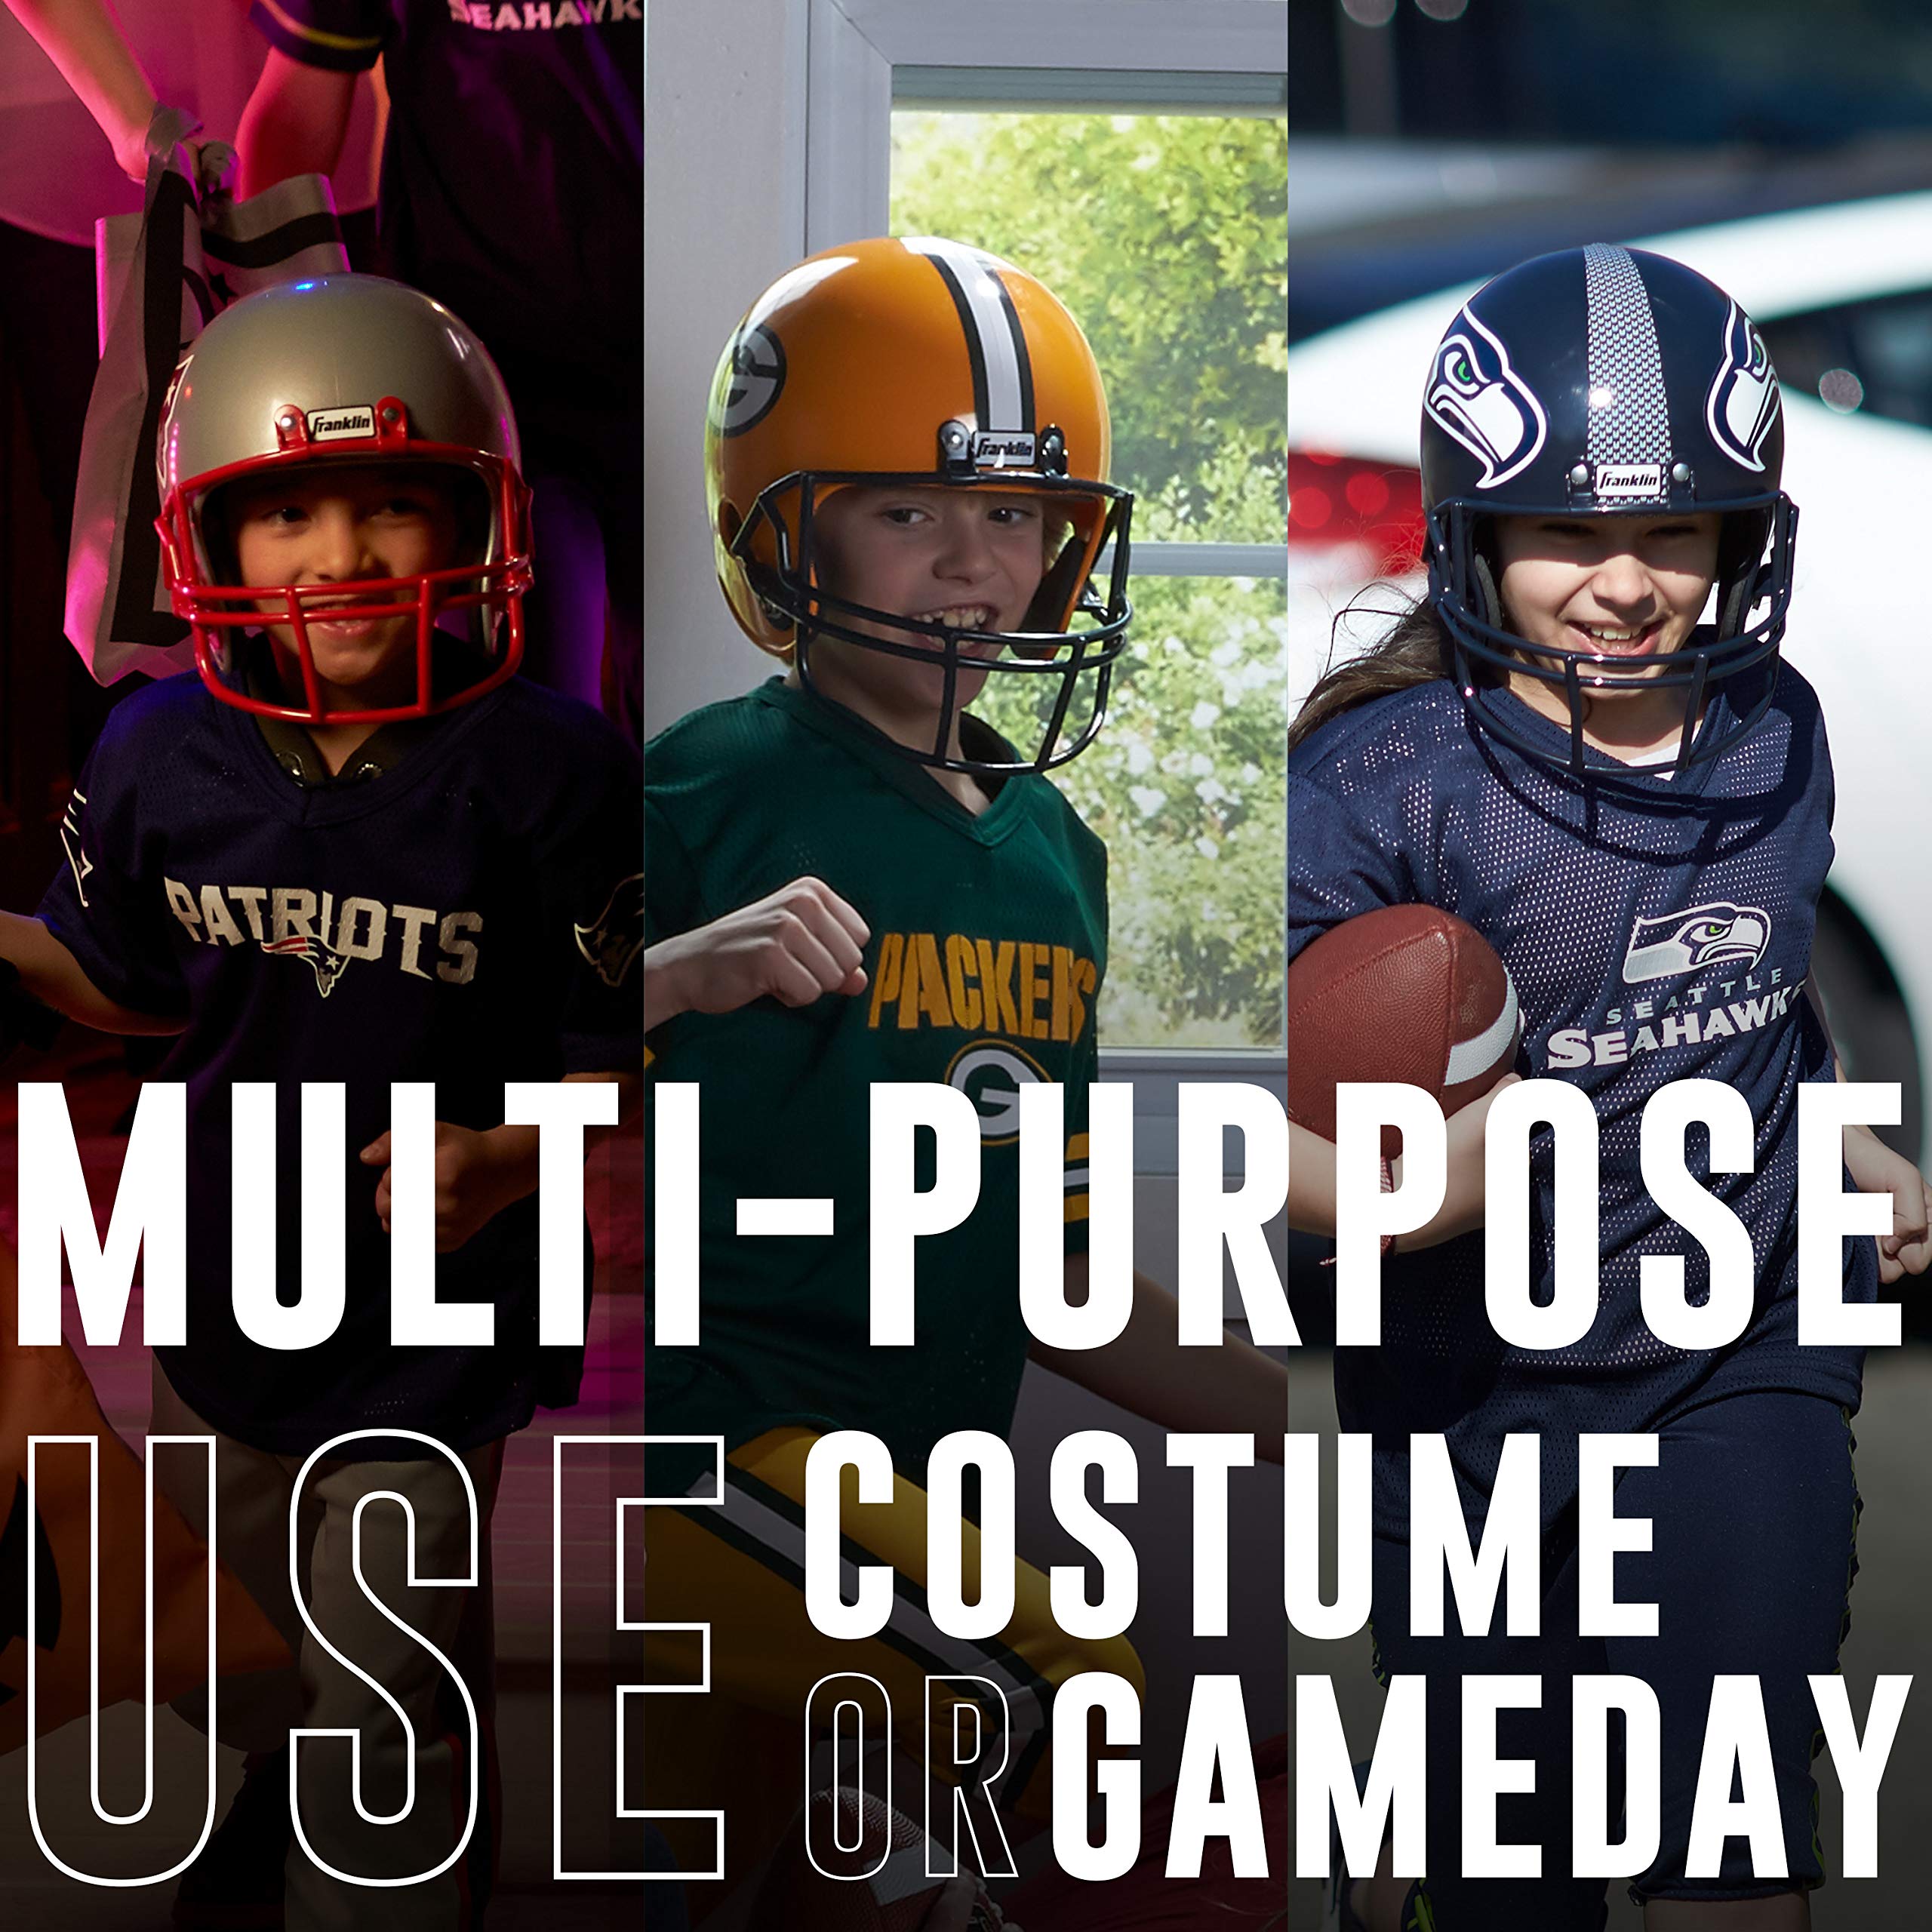 Franklin Sports NFL Kids Football Uniform Set - NFL Youth Football Costume for Boys & Girls - Set Includes Helmet, Jersey & Pants